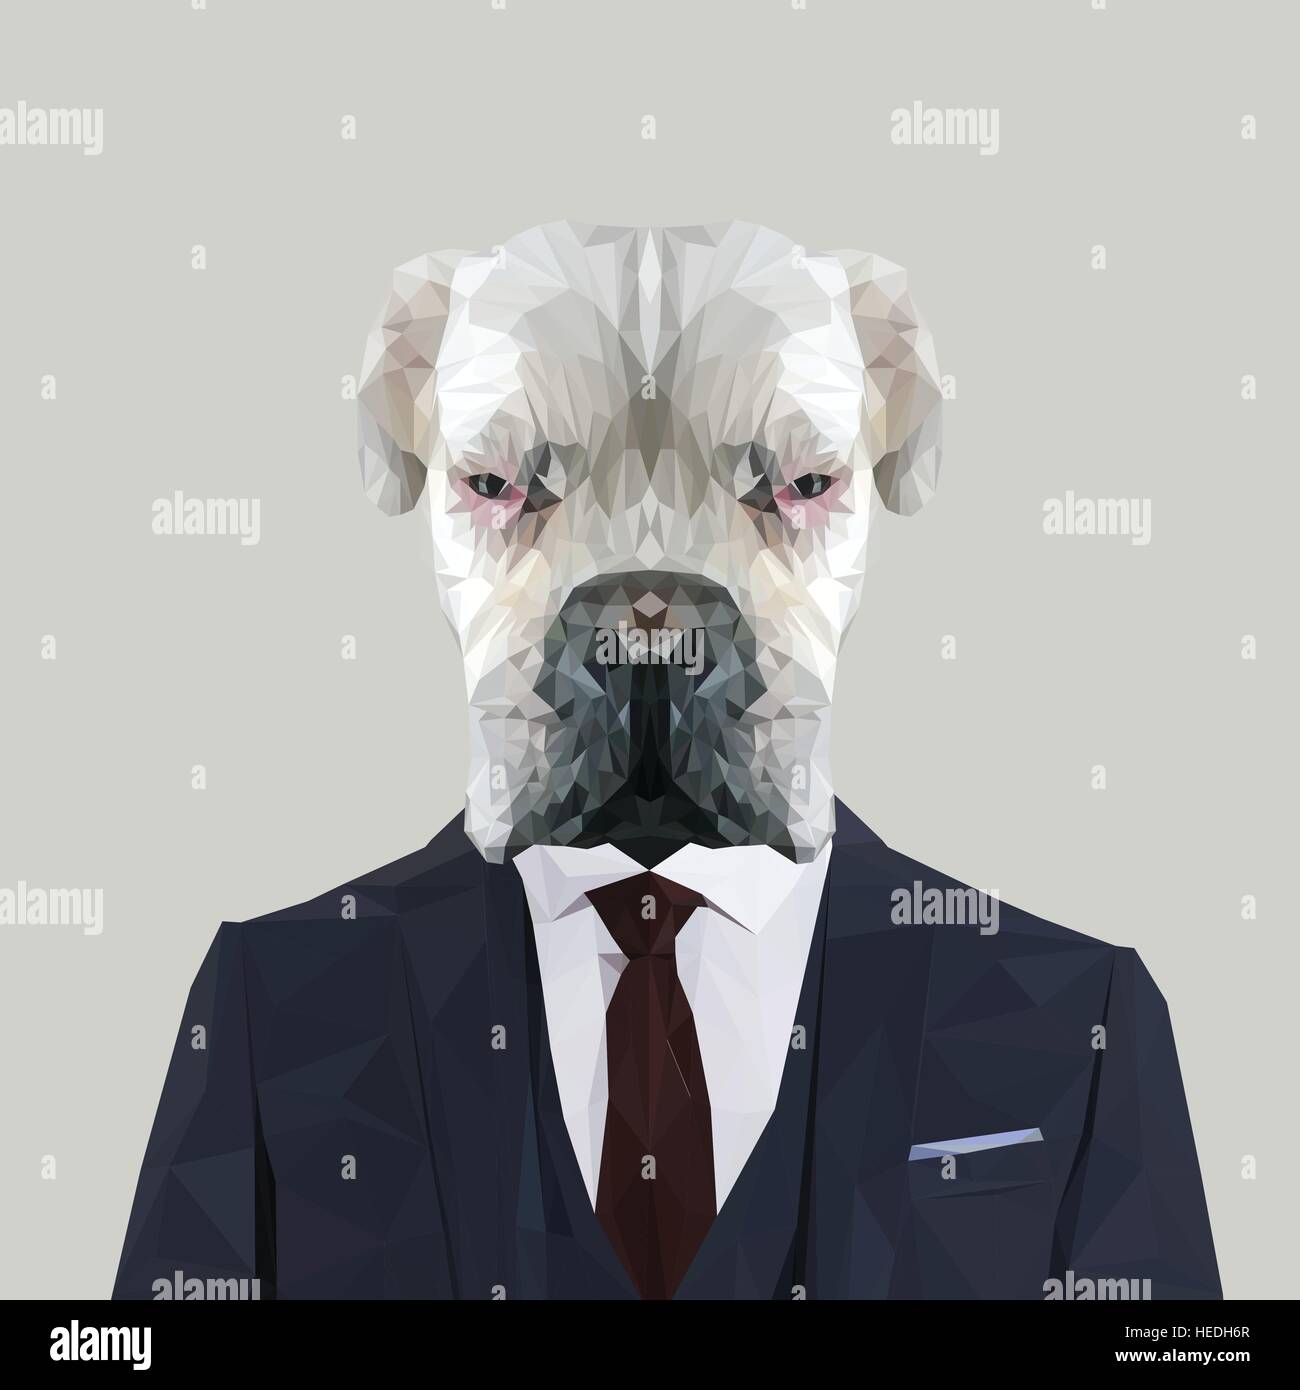 White Albino Boxer Hund Tiere verkleidet in dunkelblauen Anzug mit roter Krawatte. Business-Mann. Vektor-Illustration. Stock Vektor